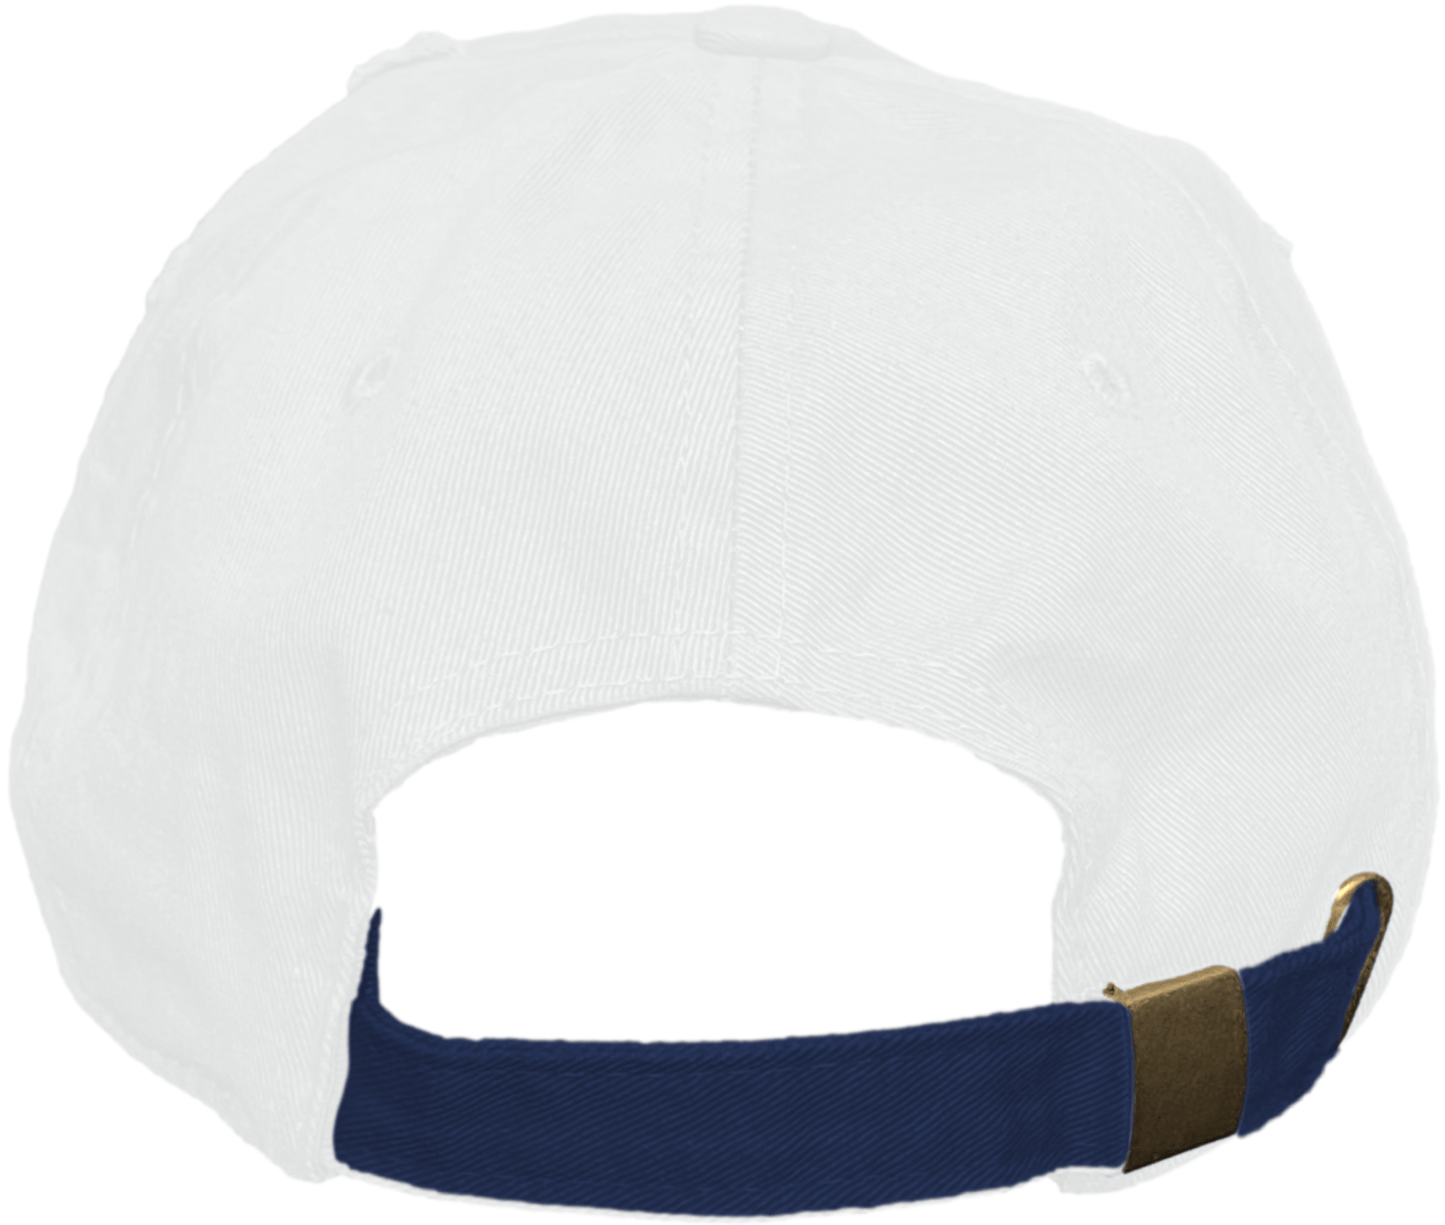 Midnight Navy 5s Hats - Jordan 5 Midnight Navy Dad Hat - Crazy Baws